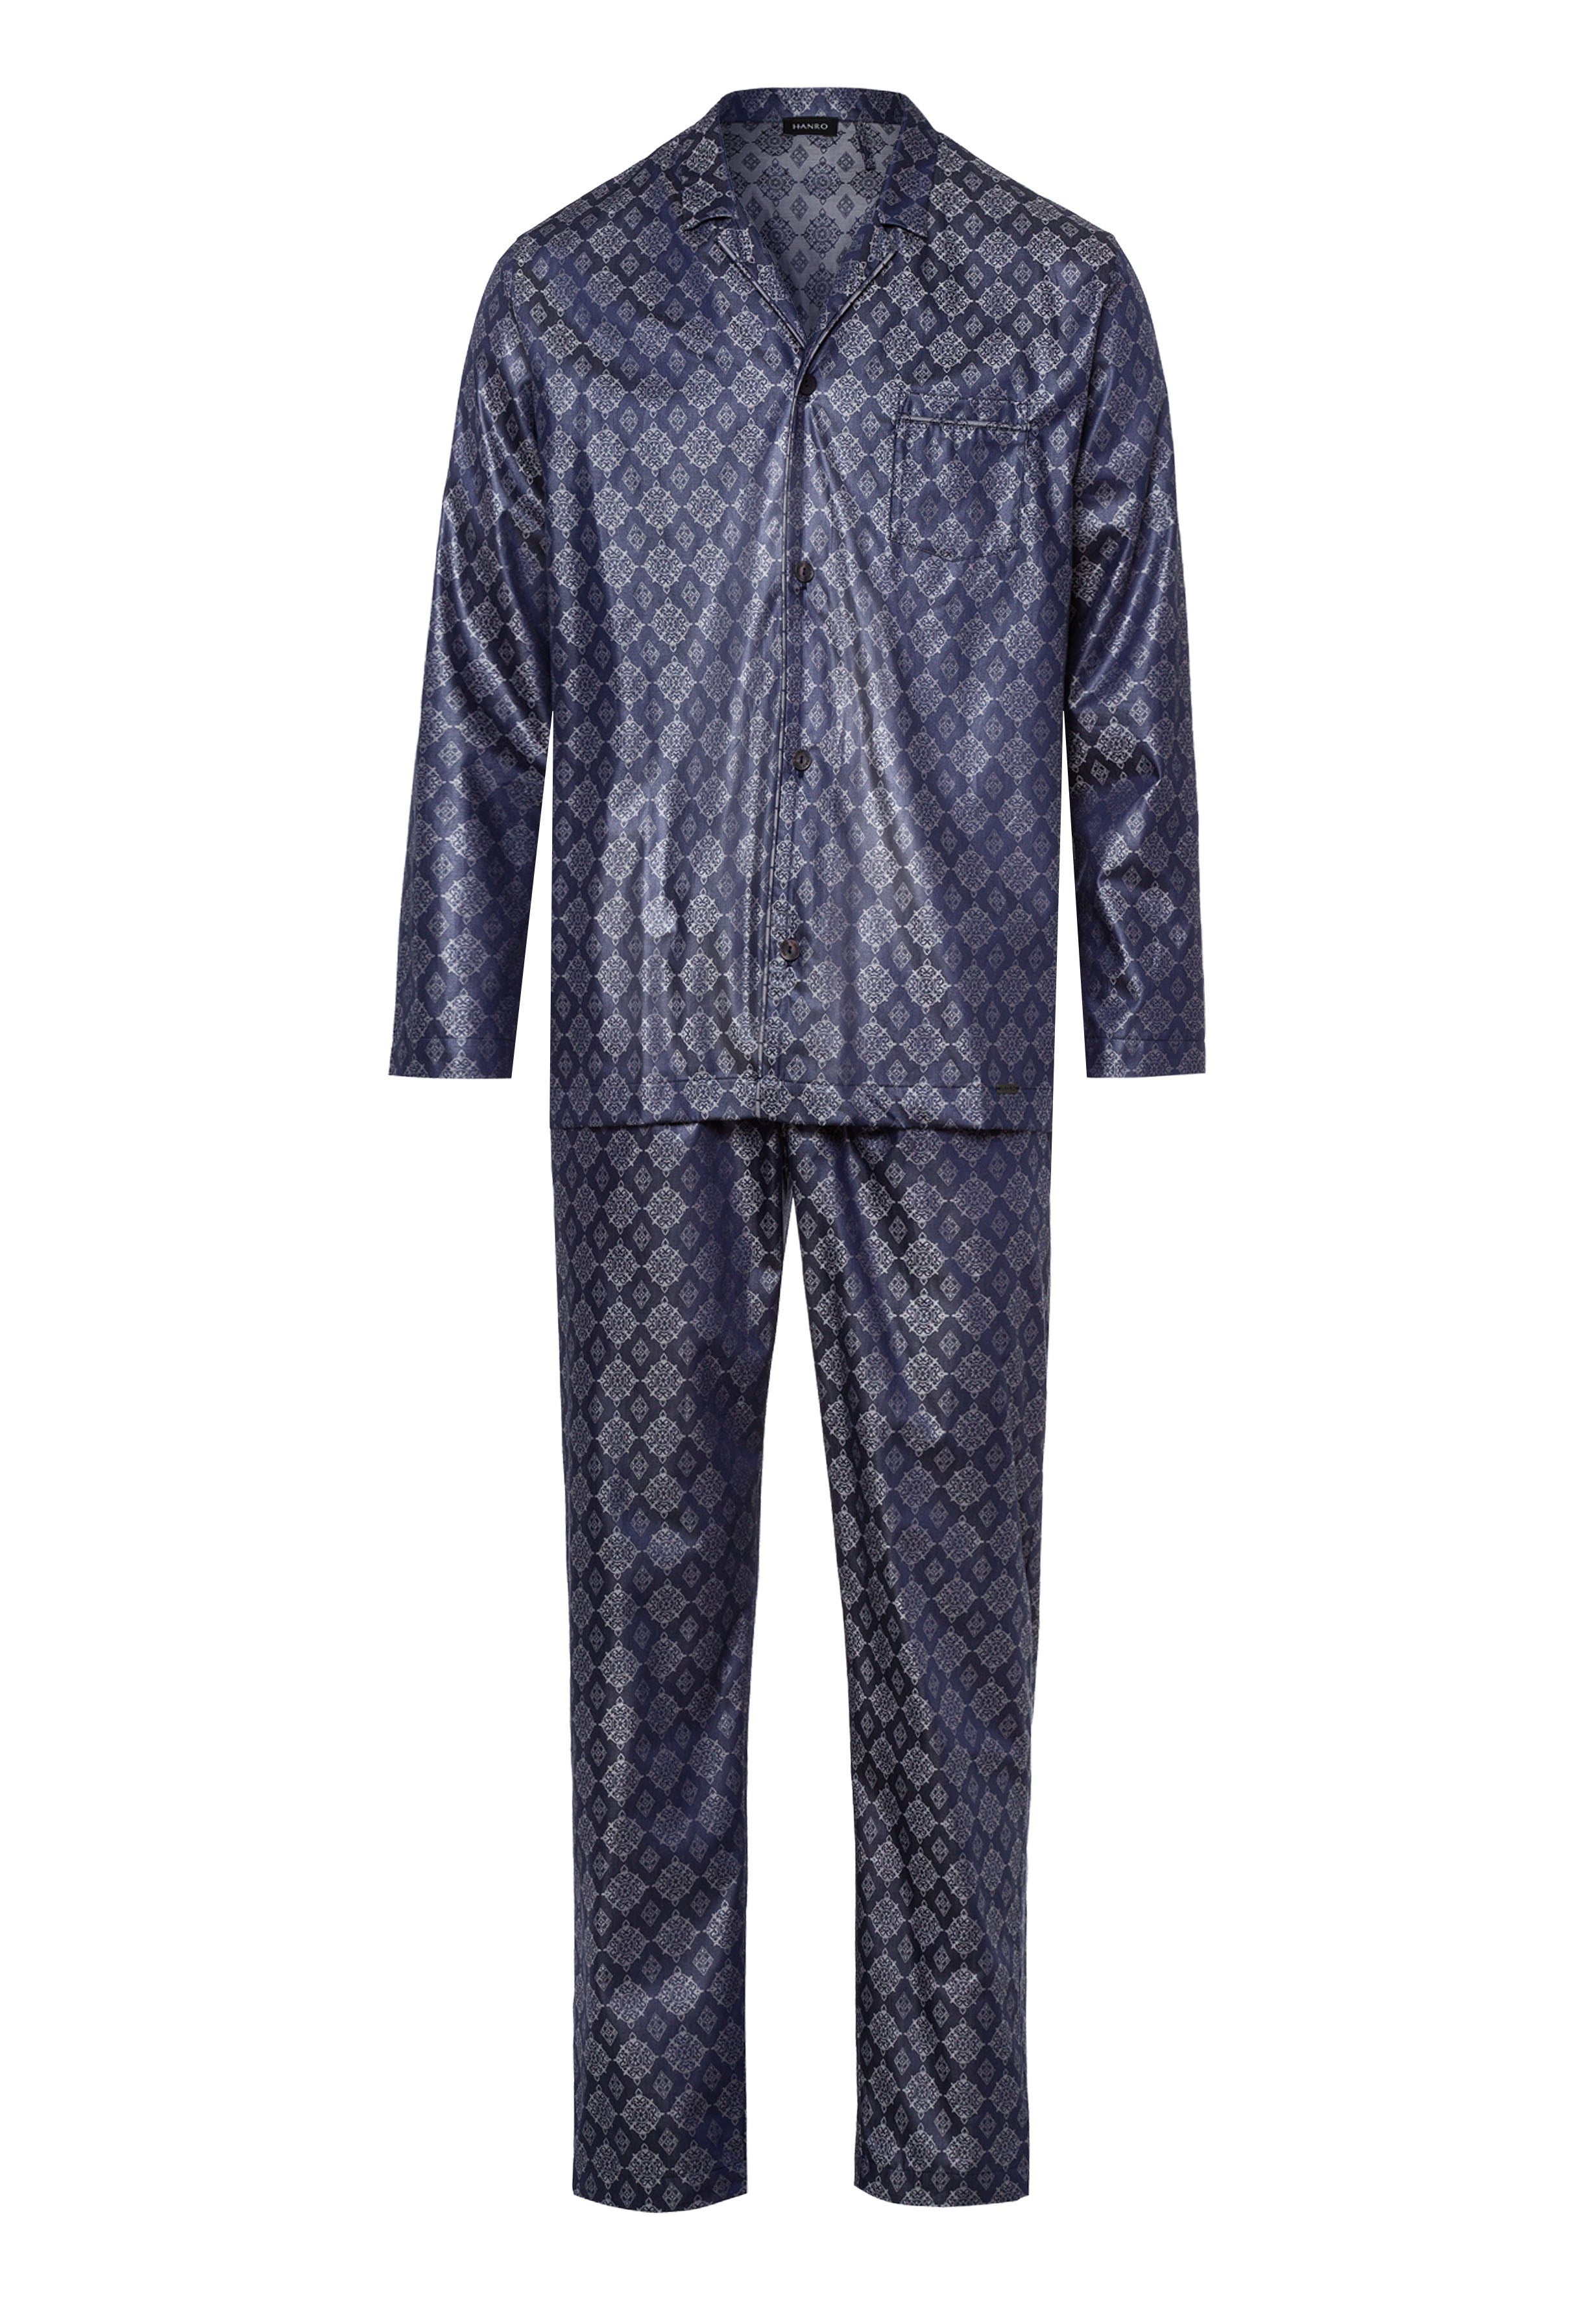 75092 Selection Long Sleeve Woven Pajama - 2965 Ornament Reverse